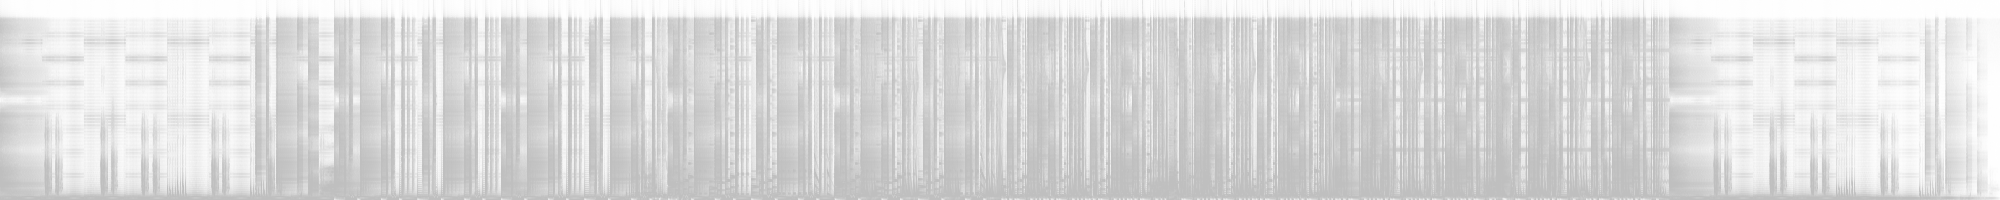 Spectrogram for 4 a.m. lake backdoor